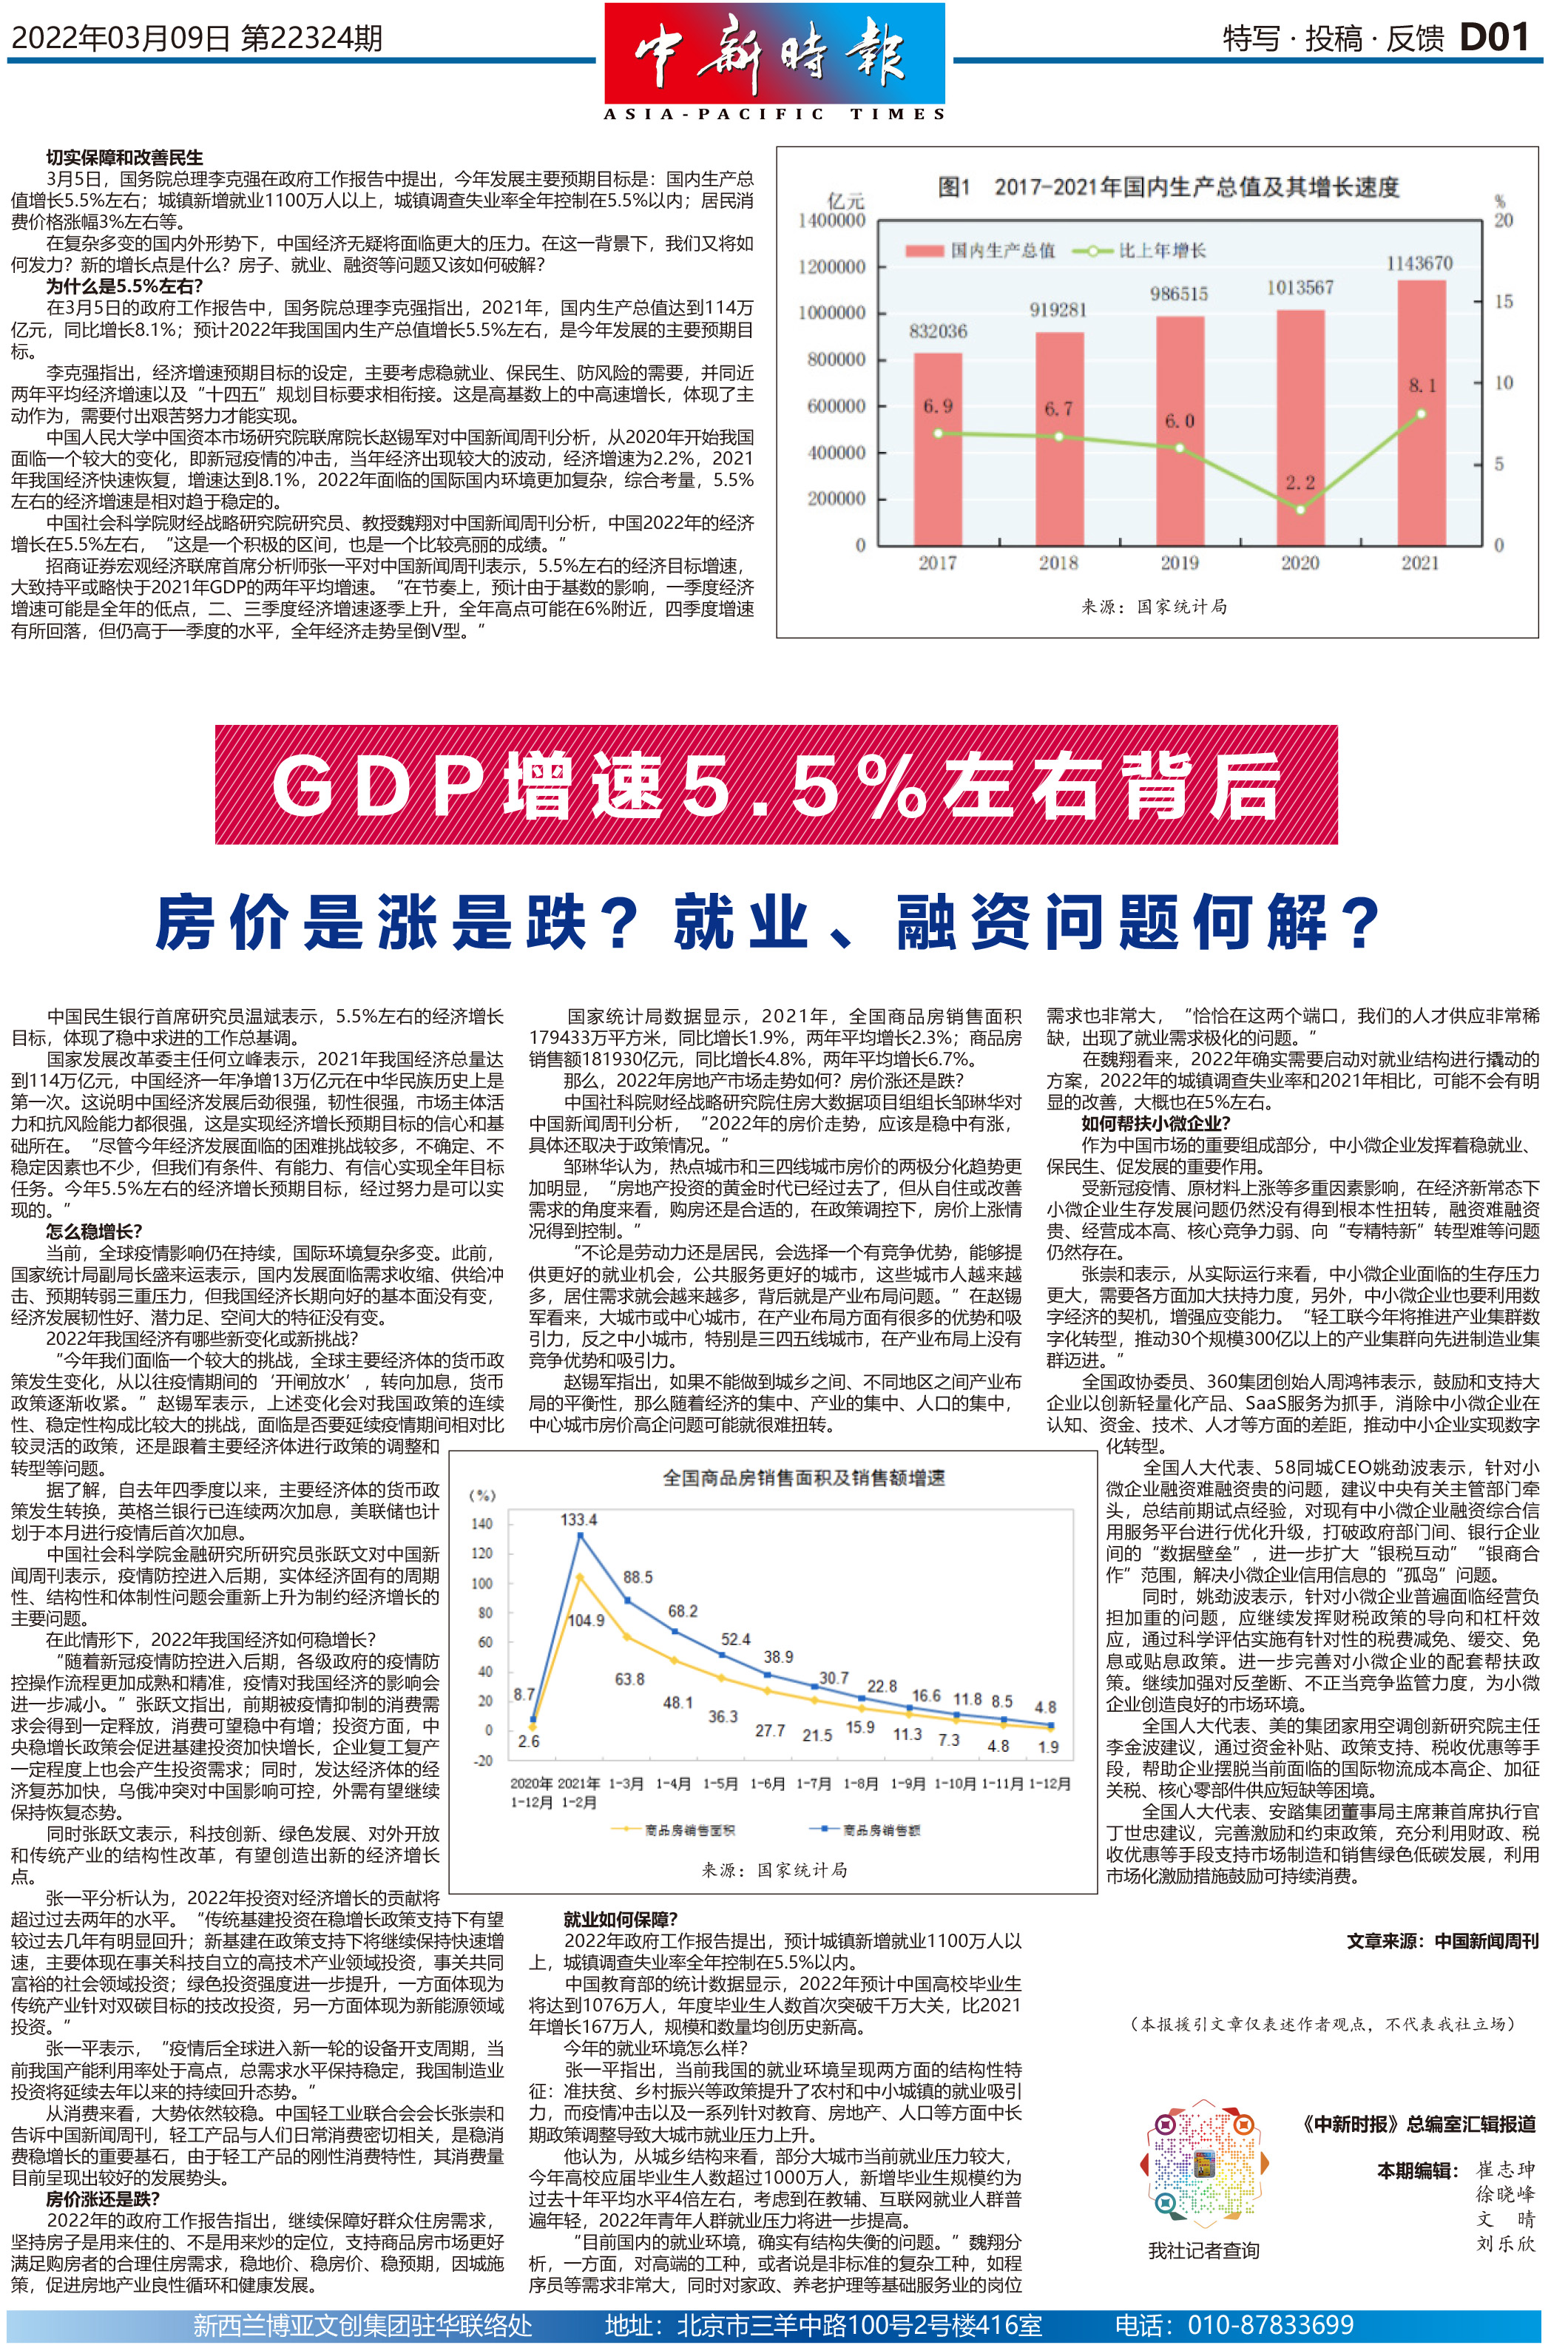 GDP增速5.5%左右背后：房价是涨是跌？就业、融资问题何解？